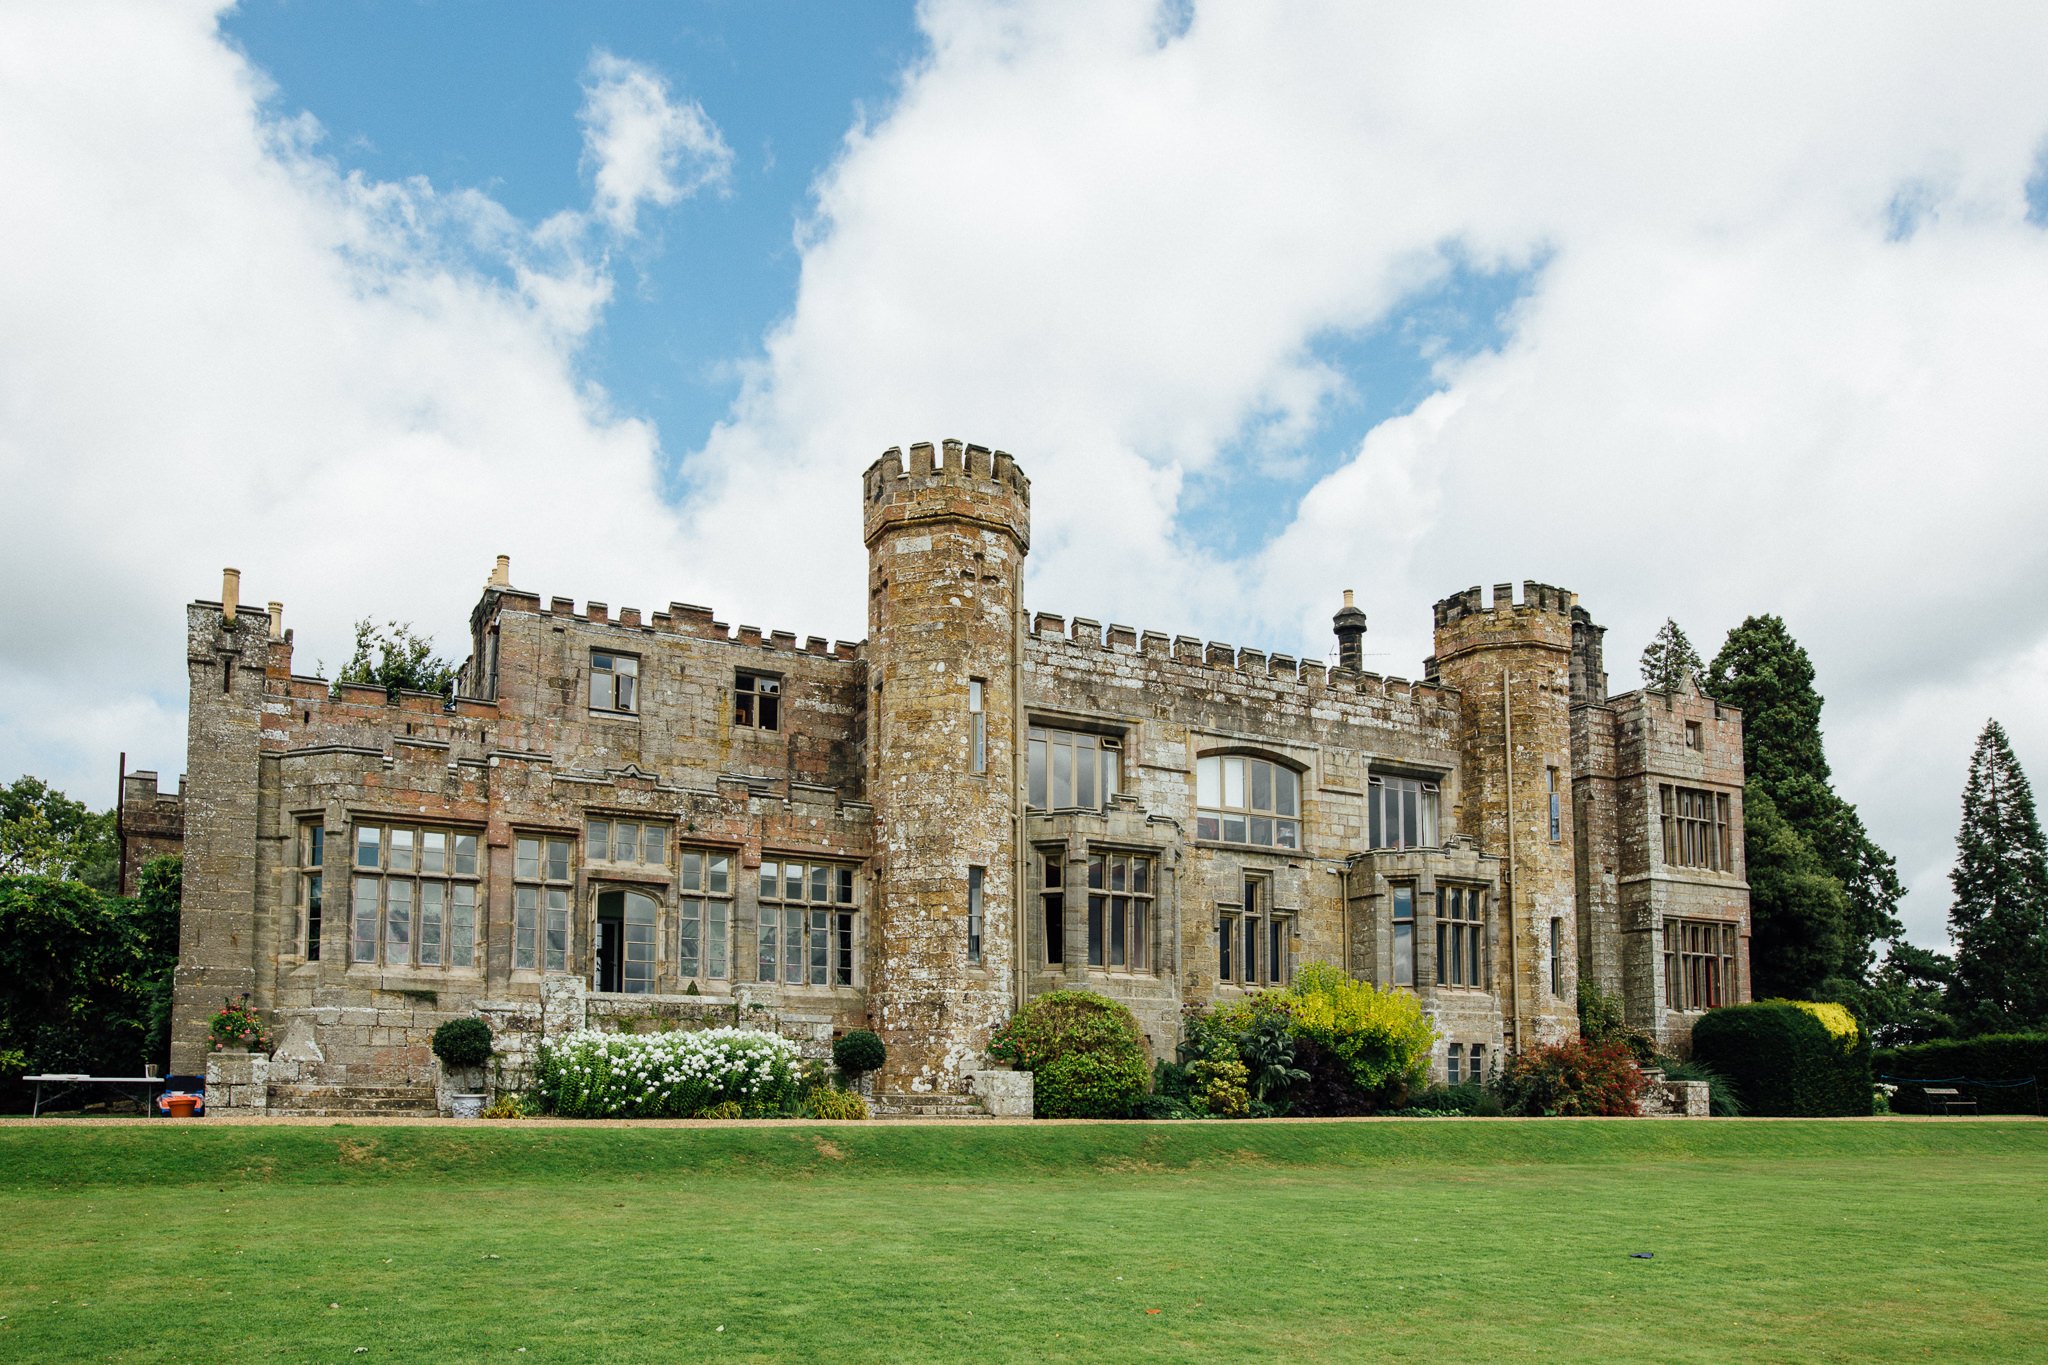  Wadhurst castle wedding venue as seen from the garden 